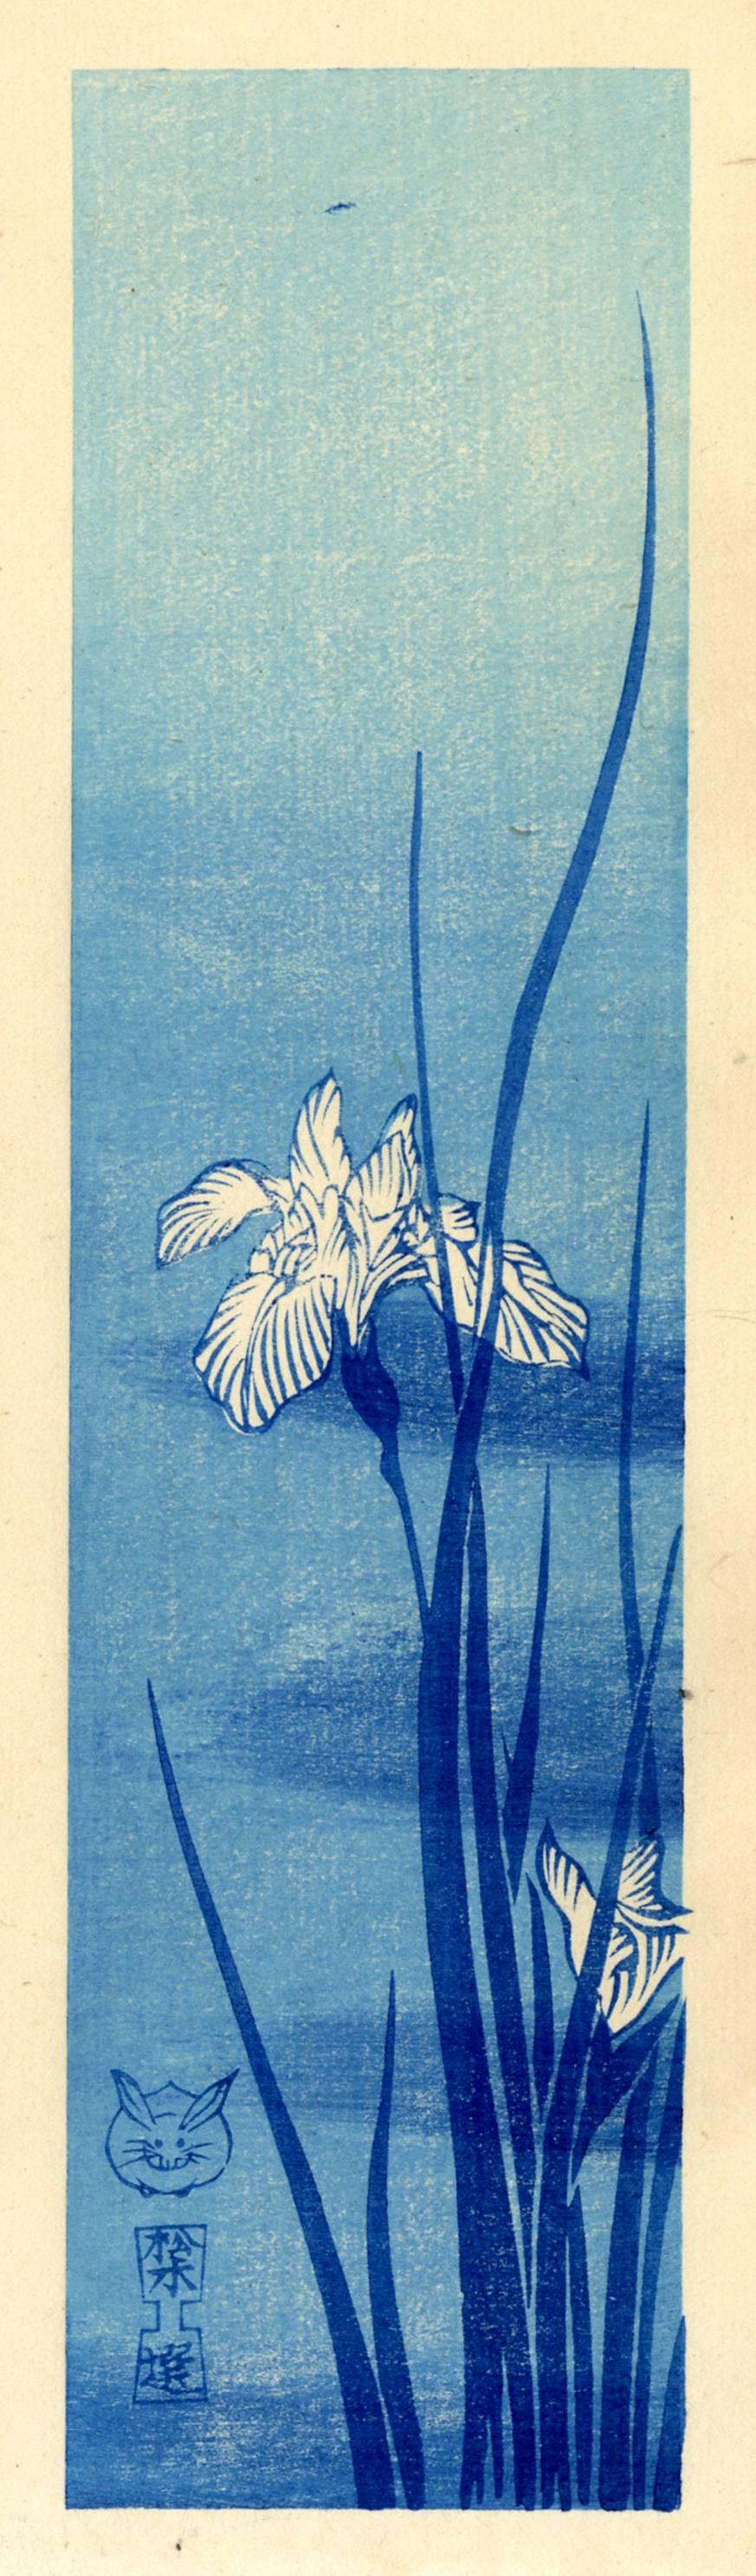 Unknown Still-Life Print - Iris